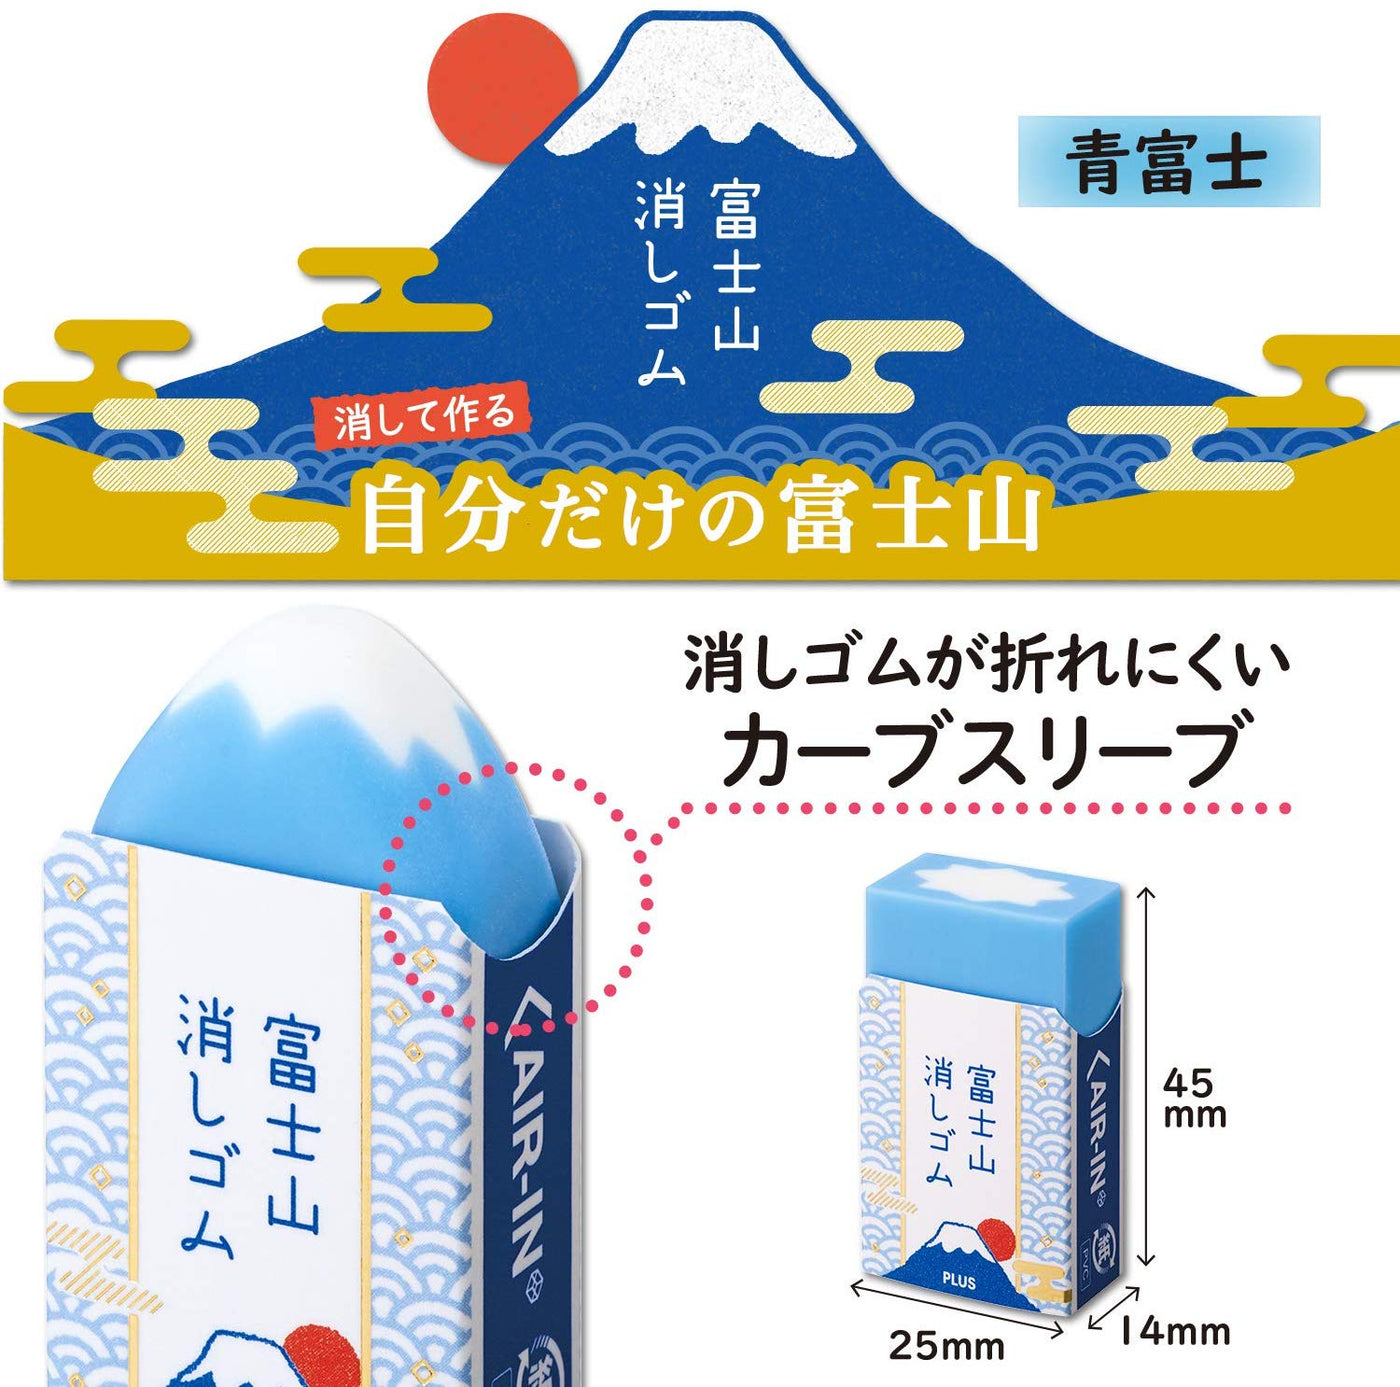 Plus Mount Fuji Eraser - Blue